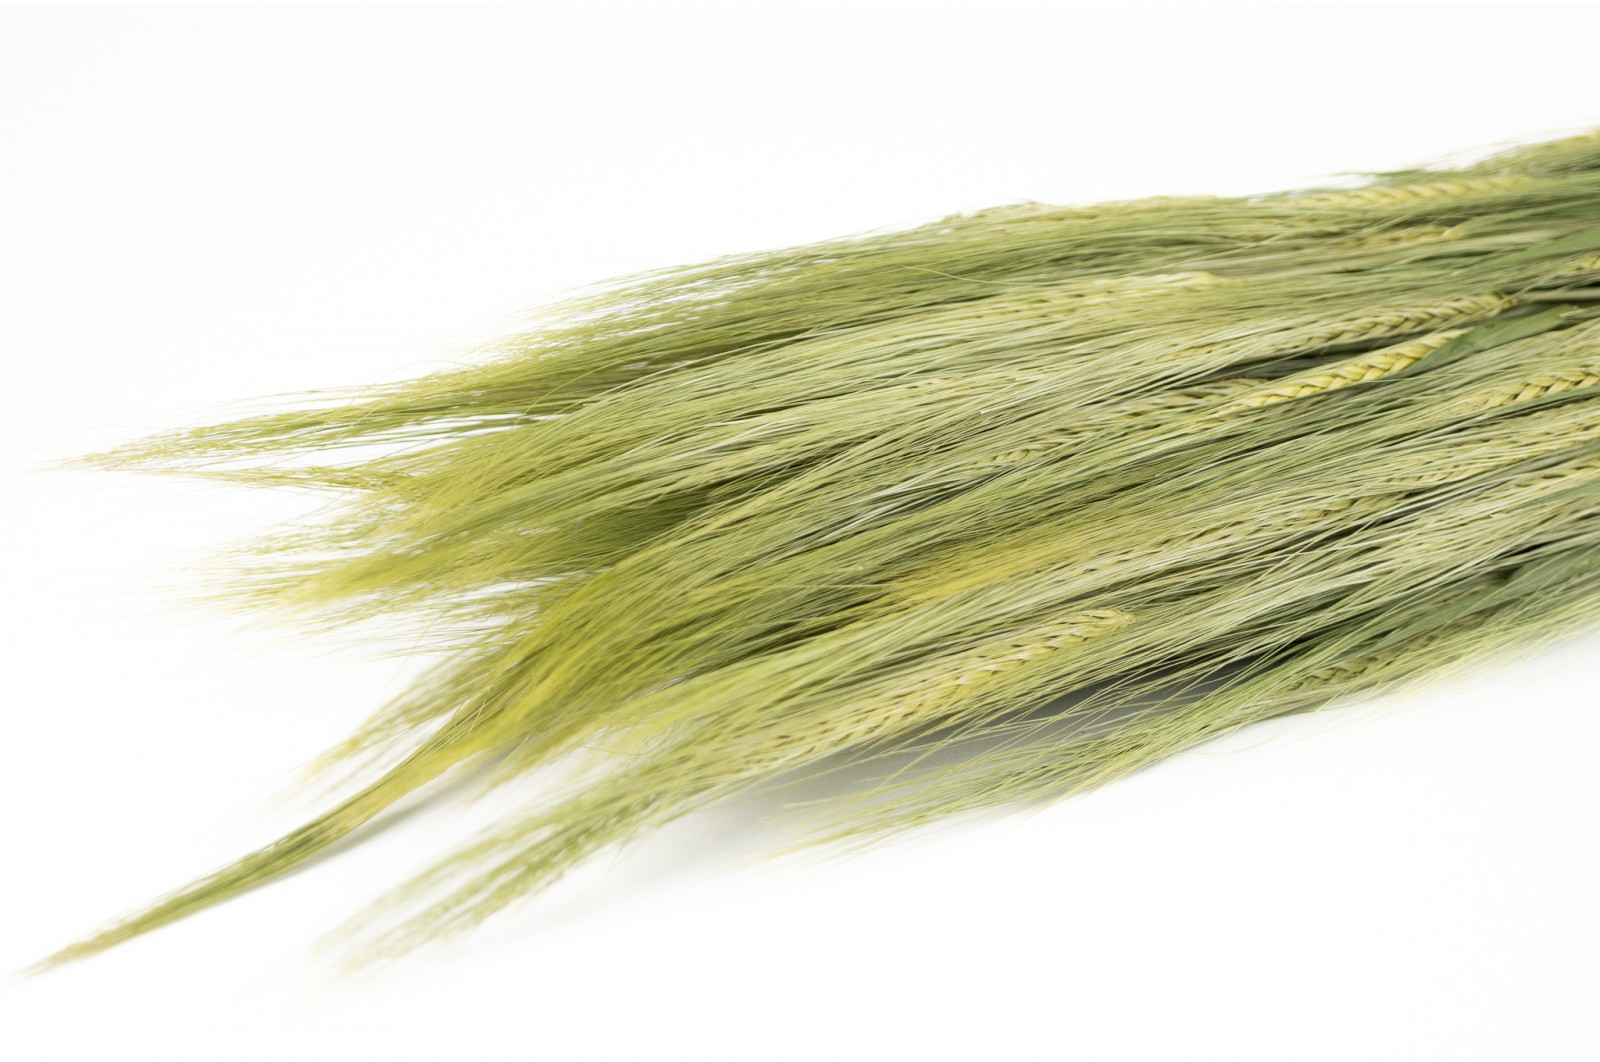 dried-barley-29